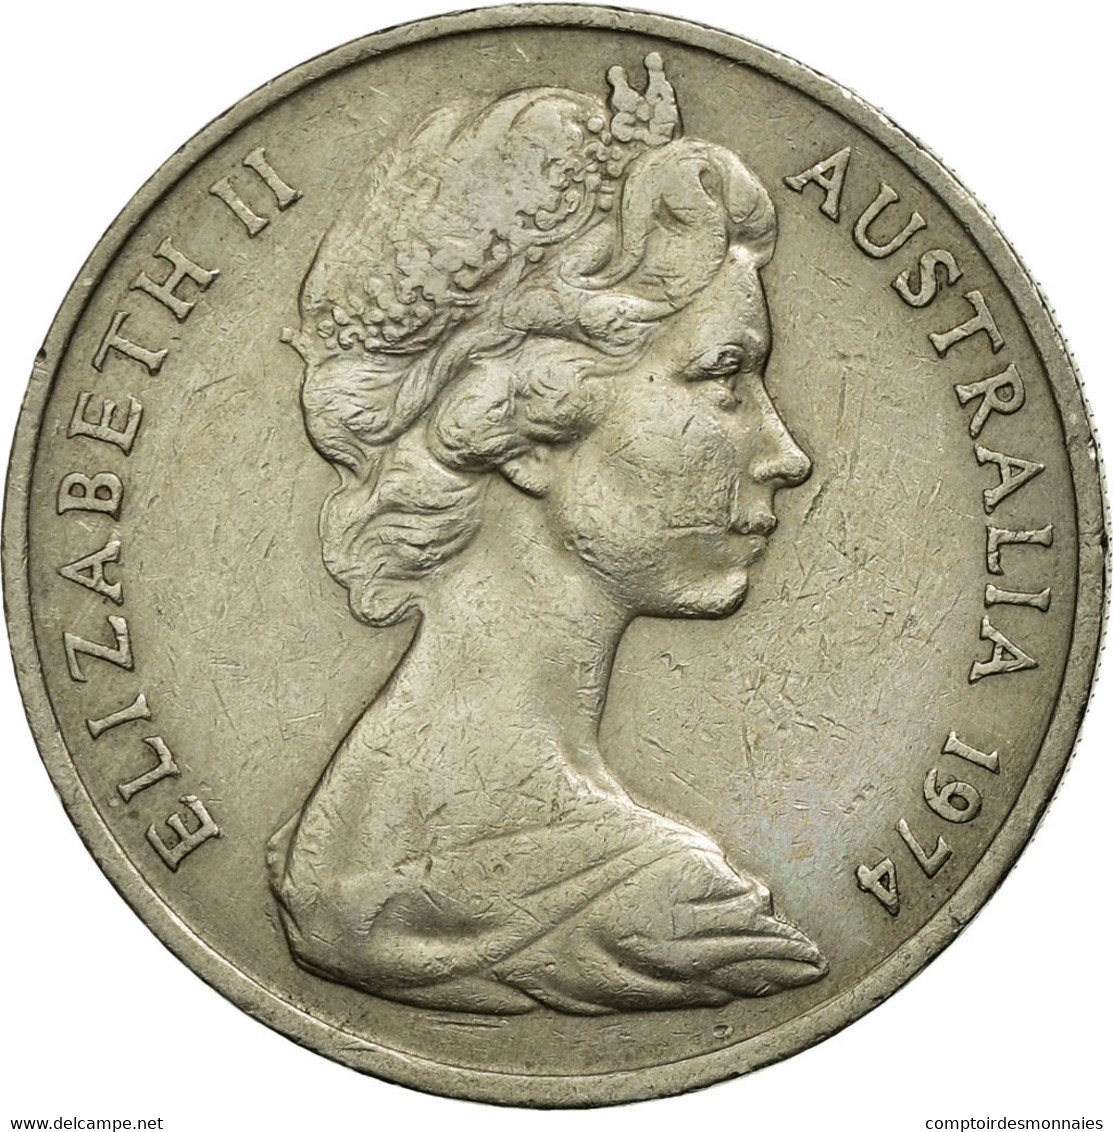 Monnaie, Australie, Elizabeth II, 20 Cents, 1974, TB+, Copper-nickel, KM:66 - 20 Cents